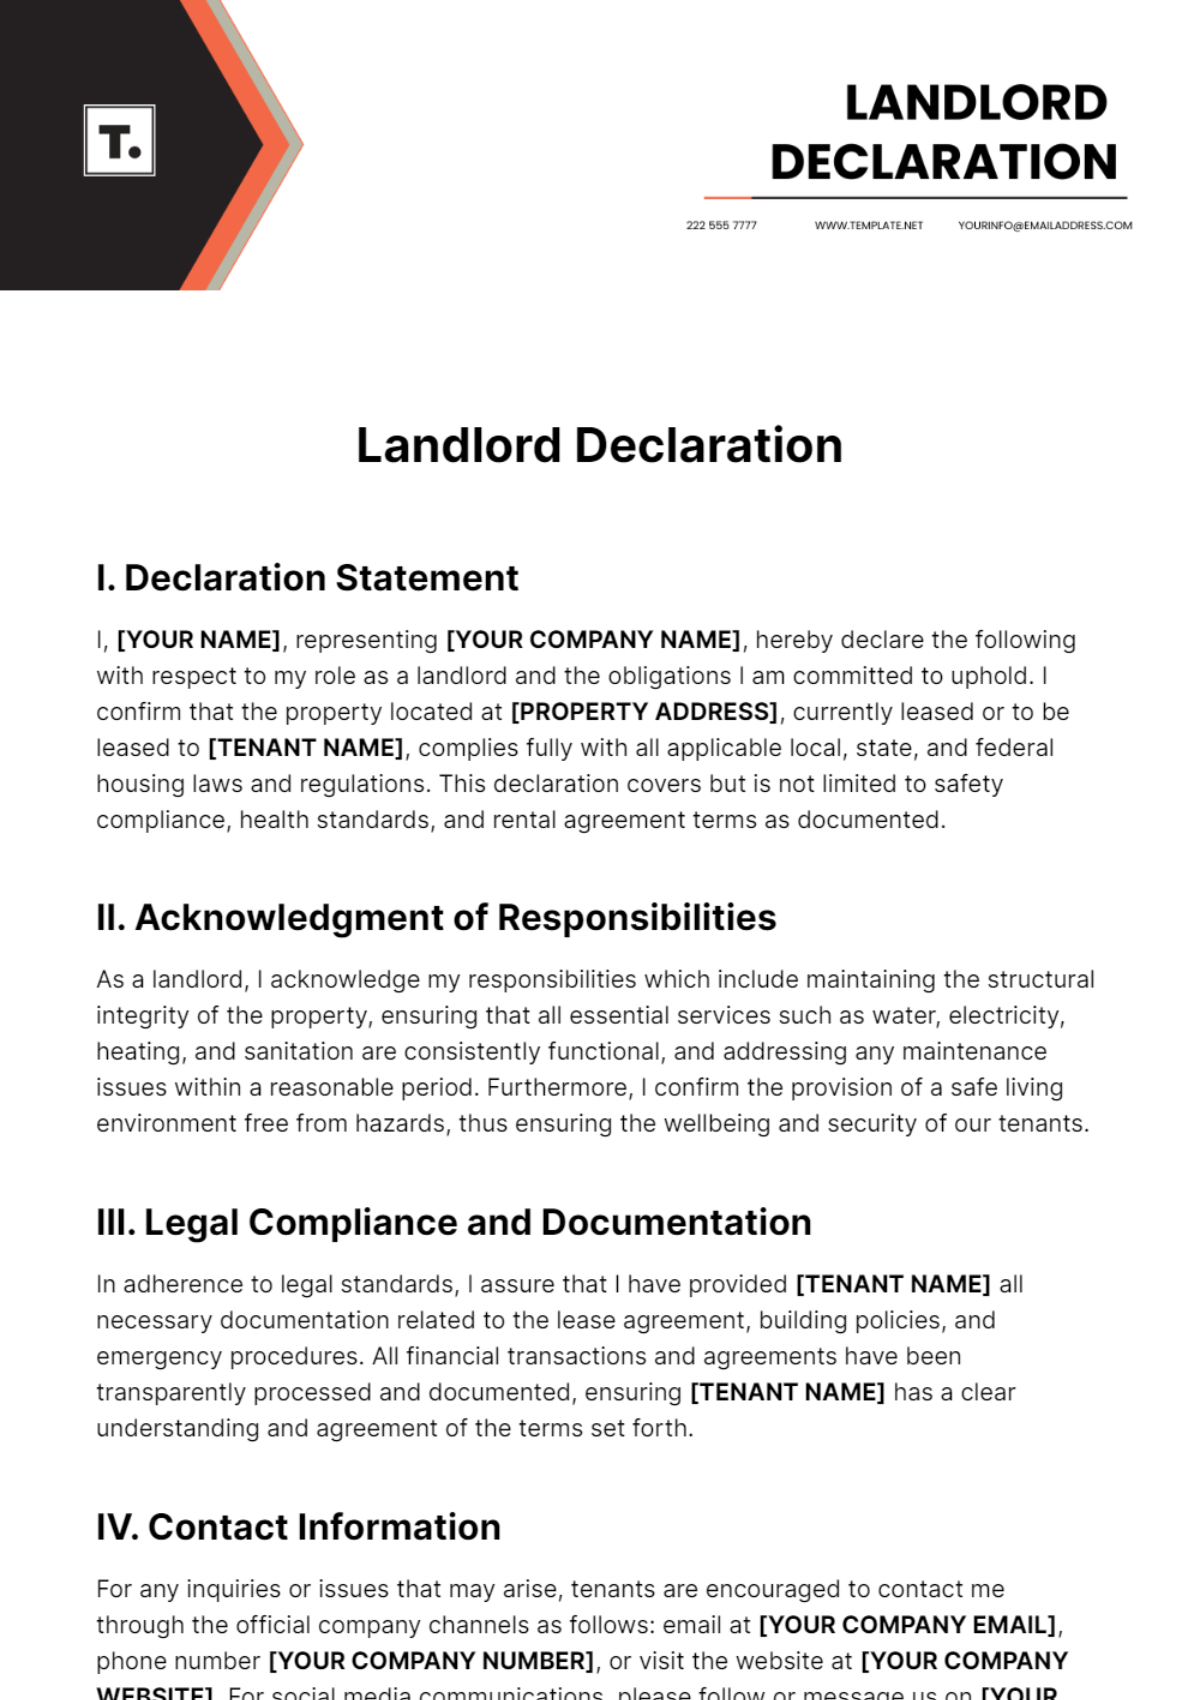 Landlord Declaration Template